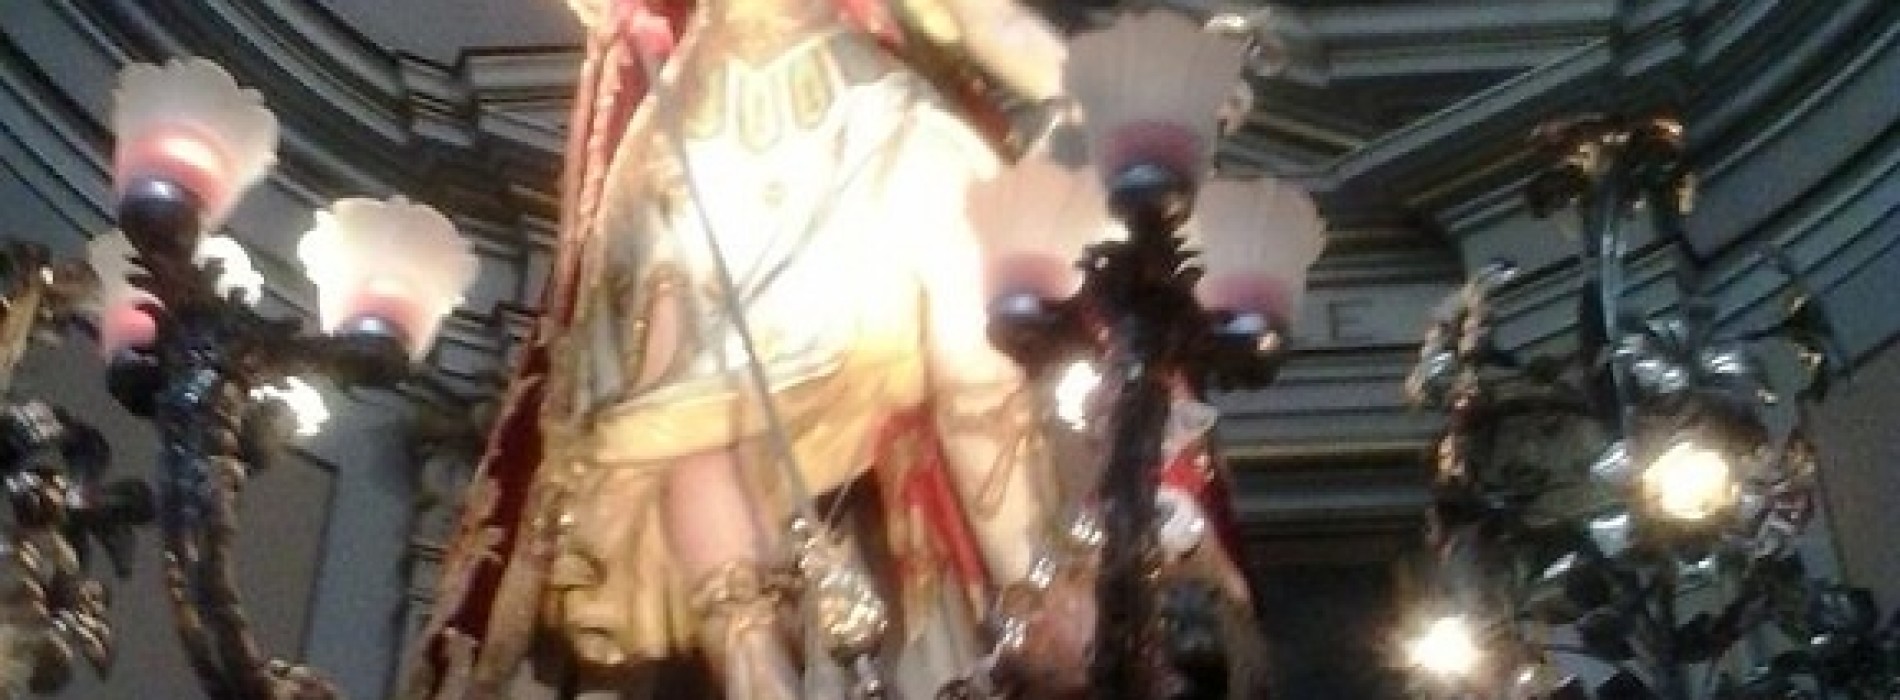 San Michele Arcangelo, patrono di Caltanissetta